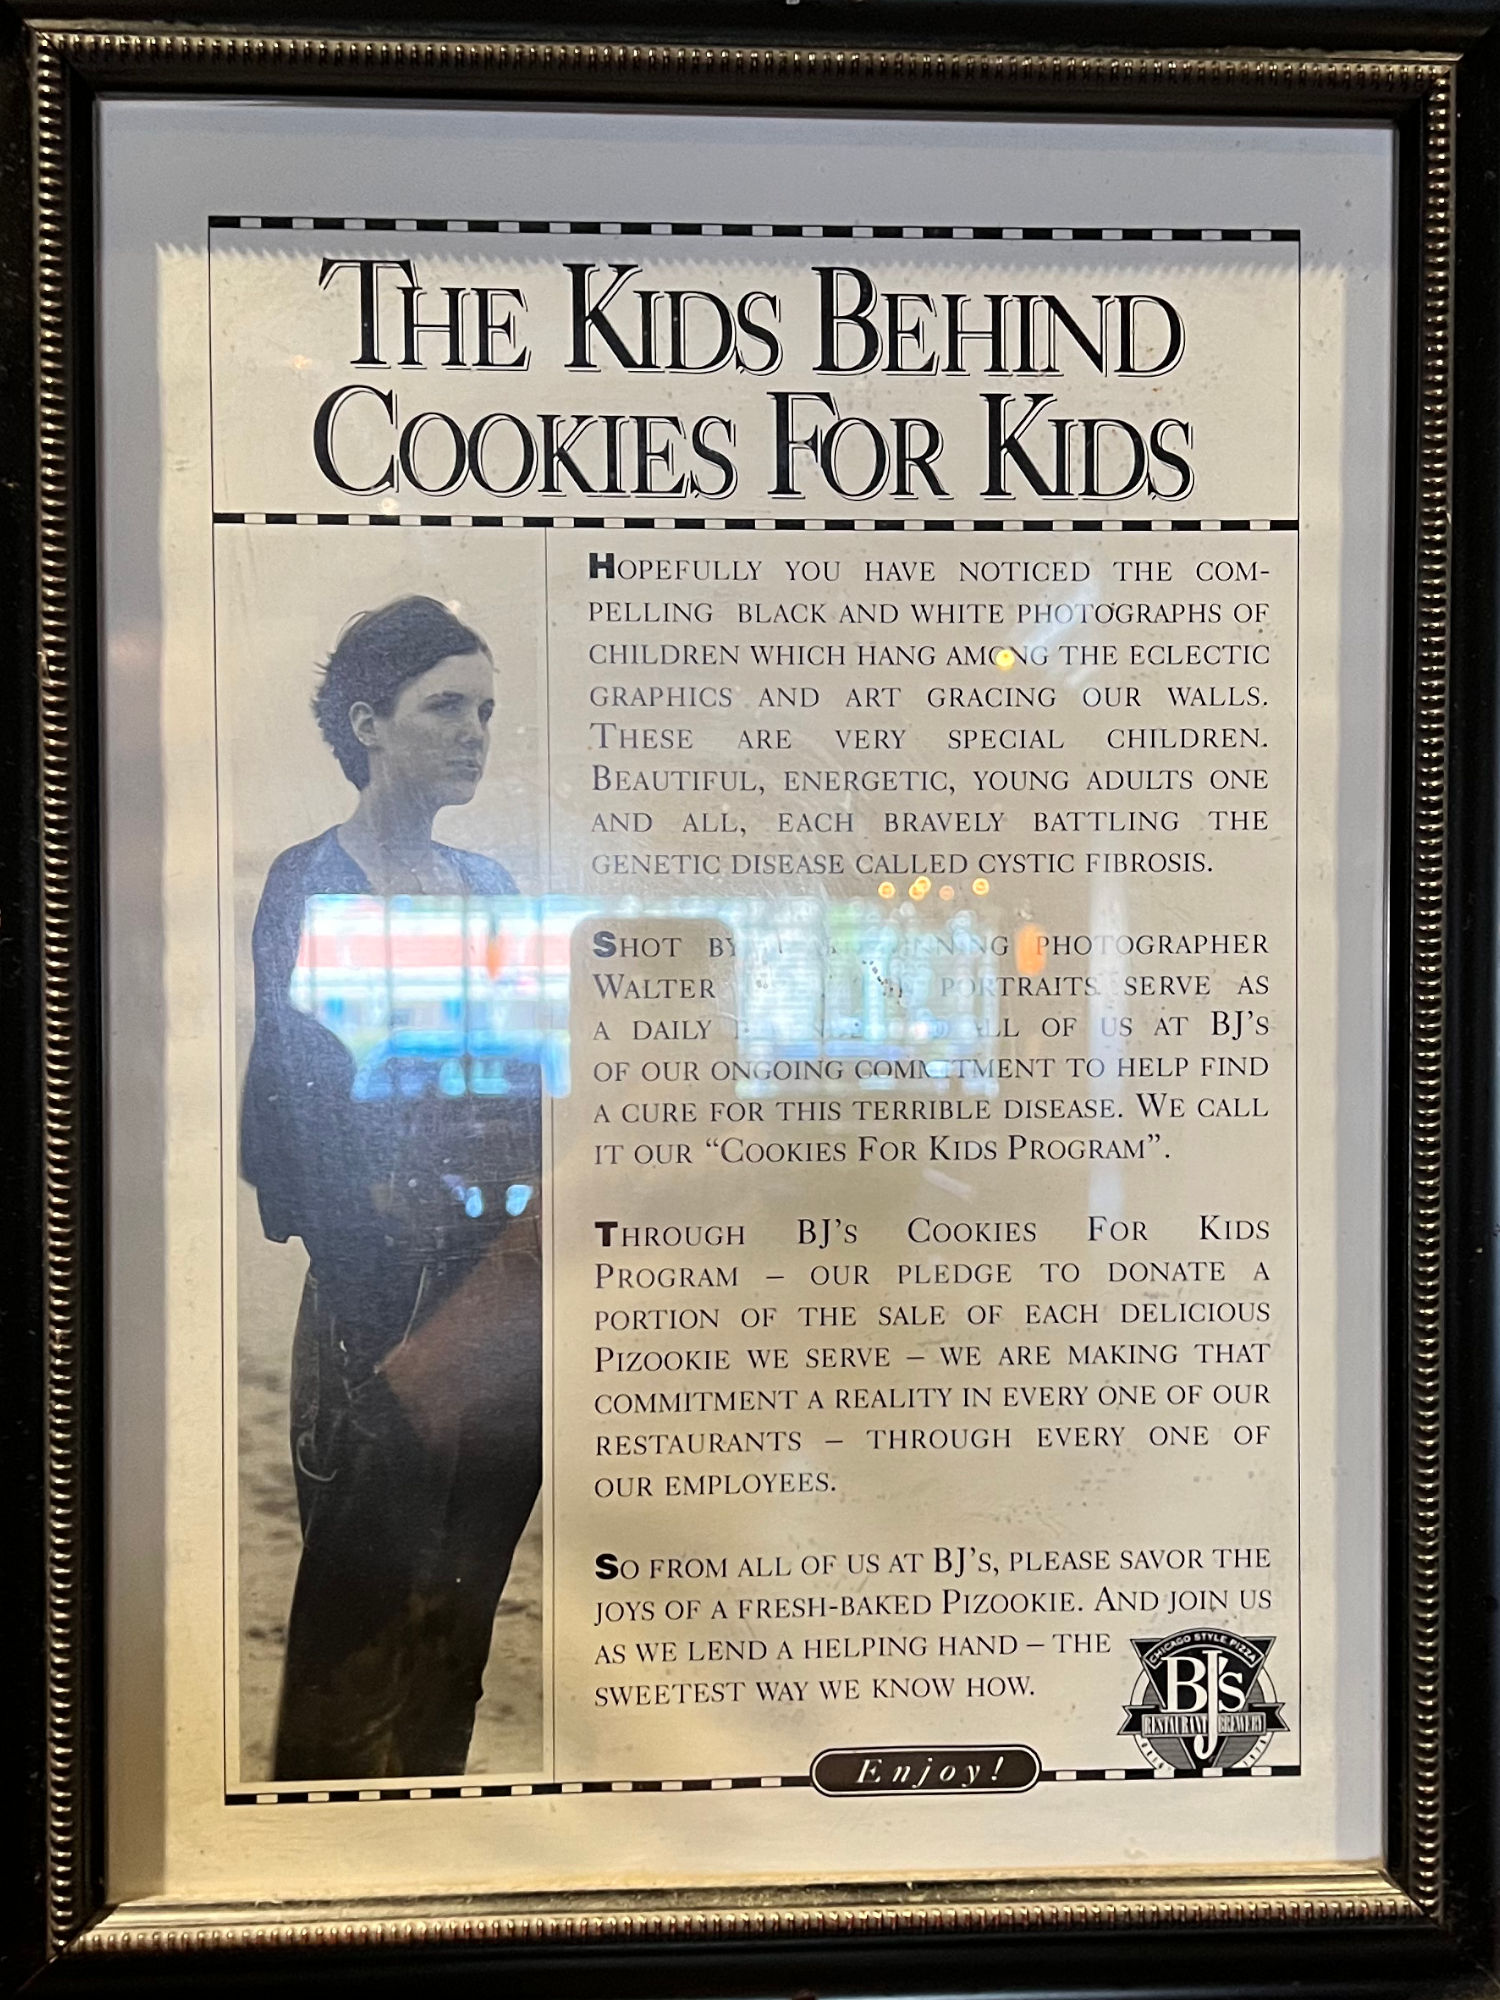 Bj's Cookies for Kids